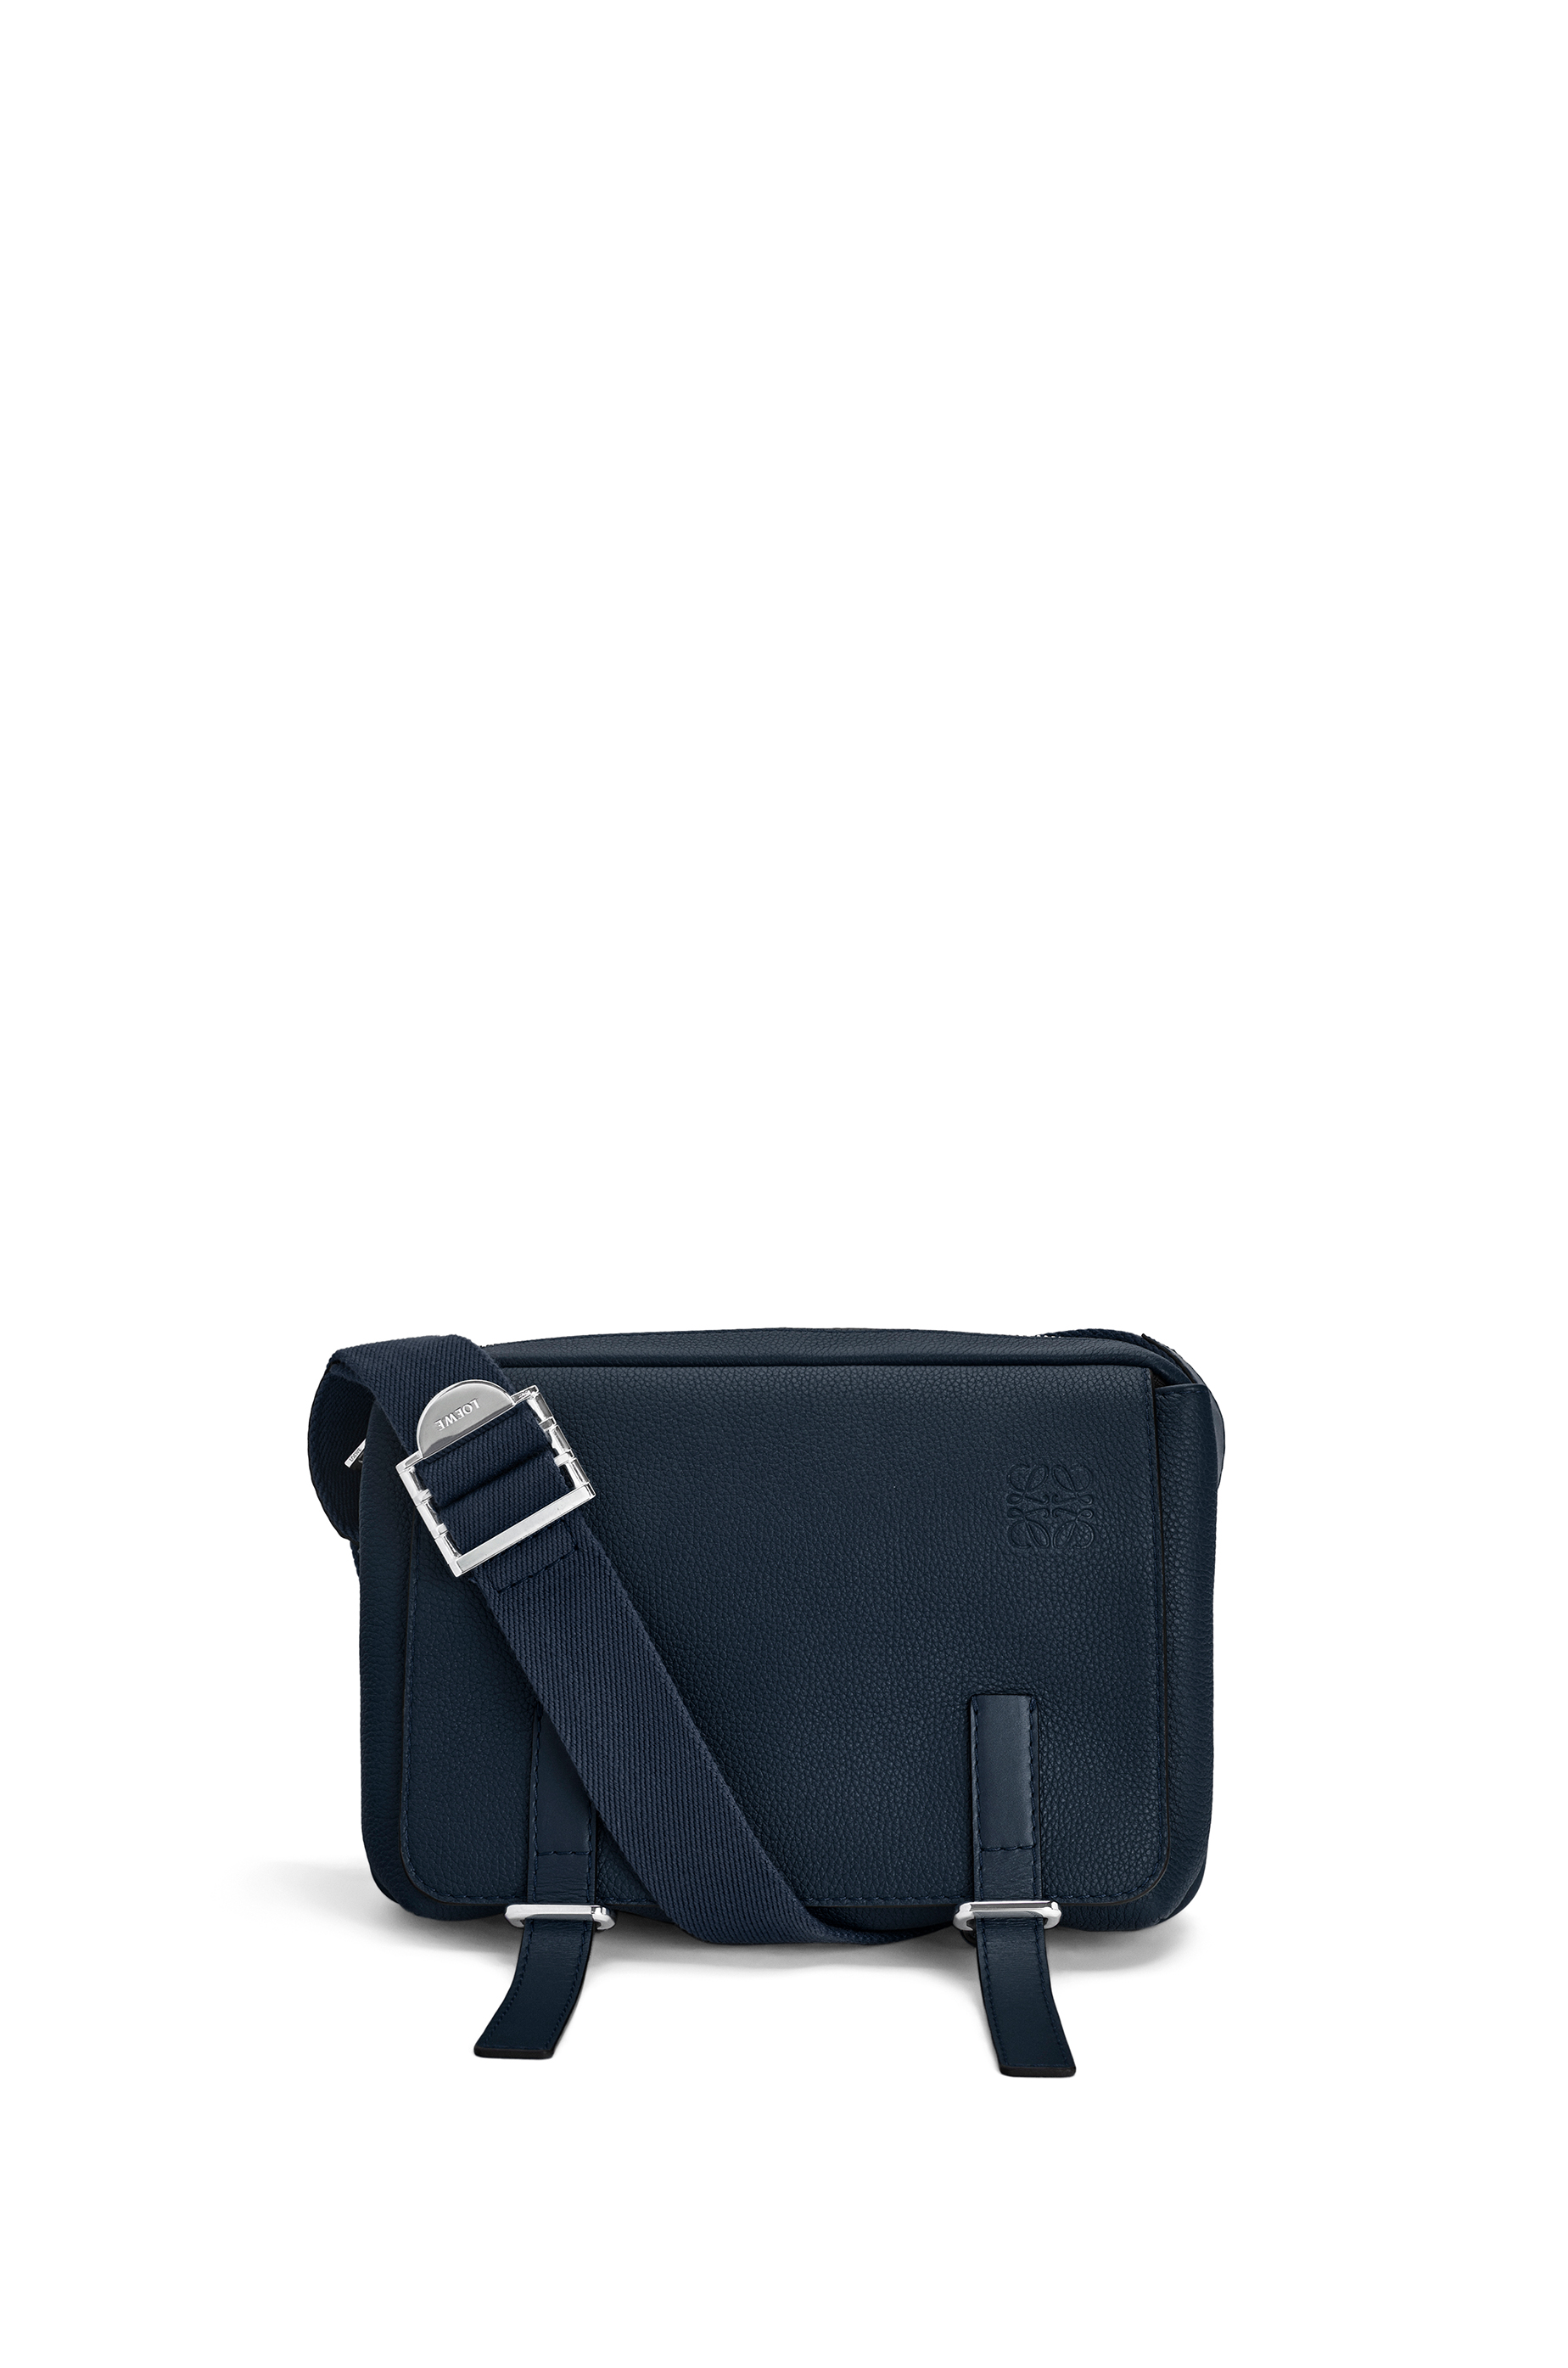 Luxury bags for men - LOEWE Official Site